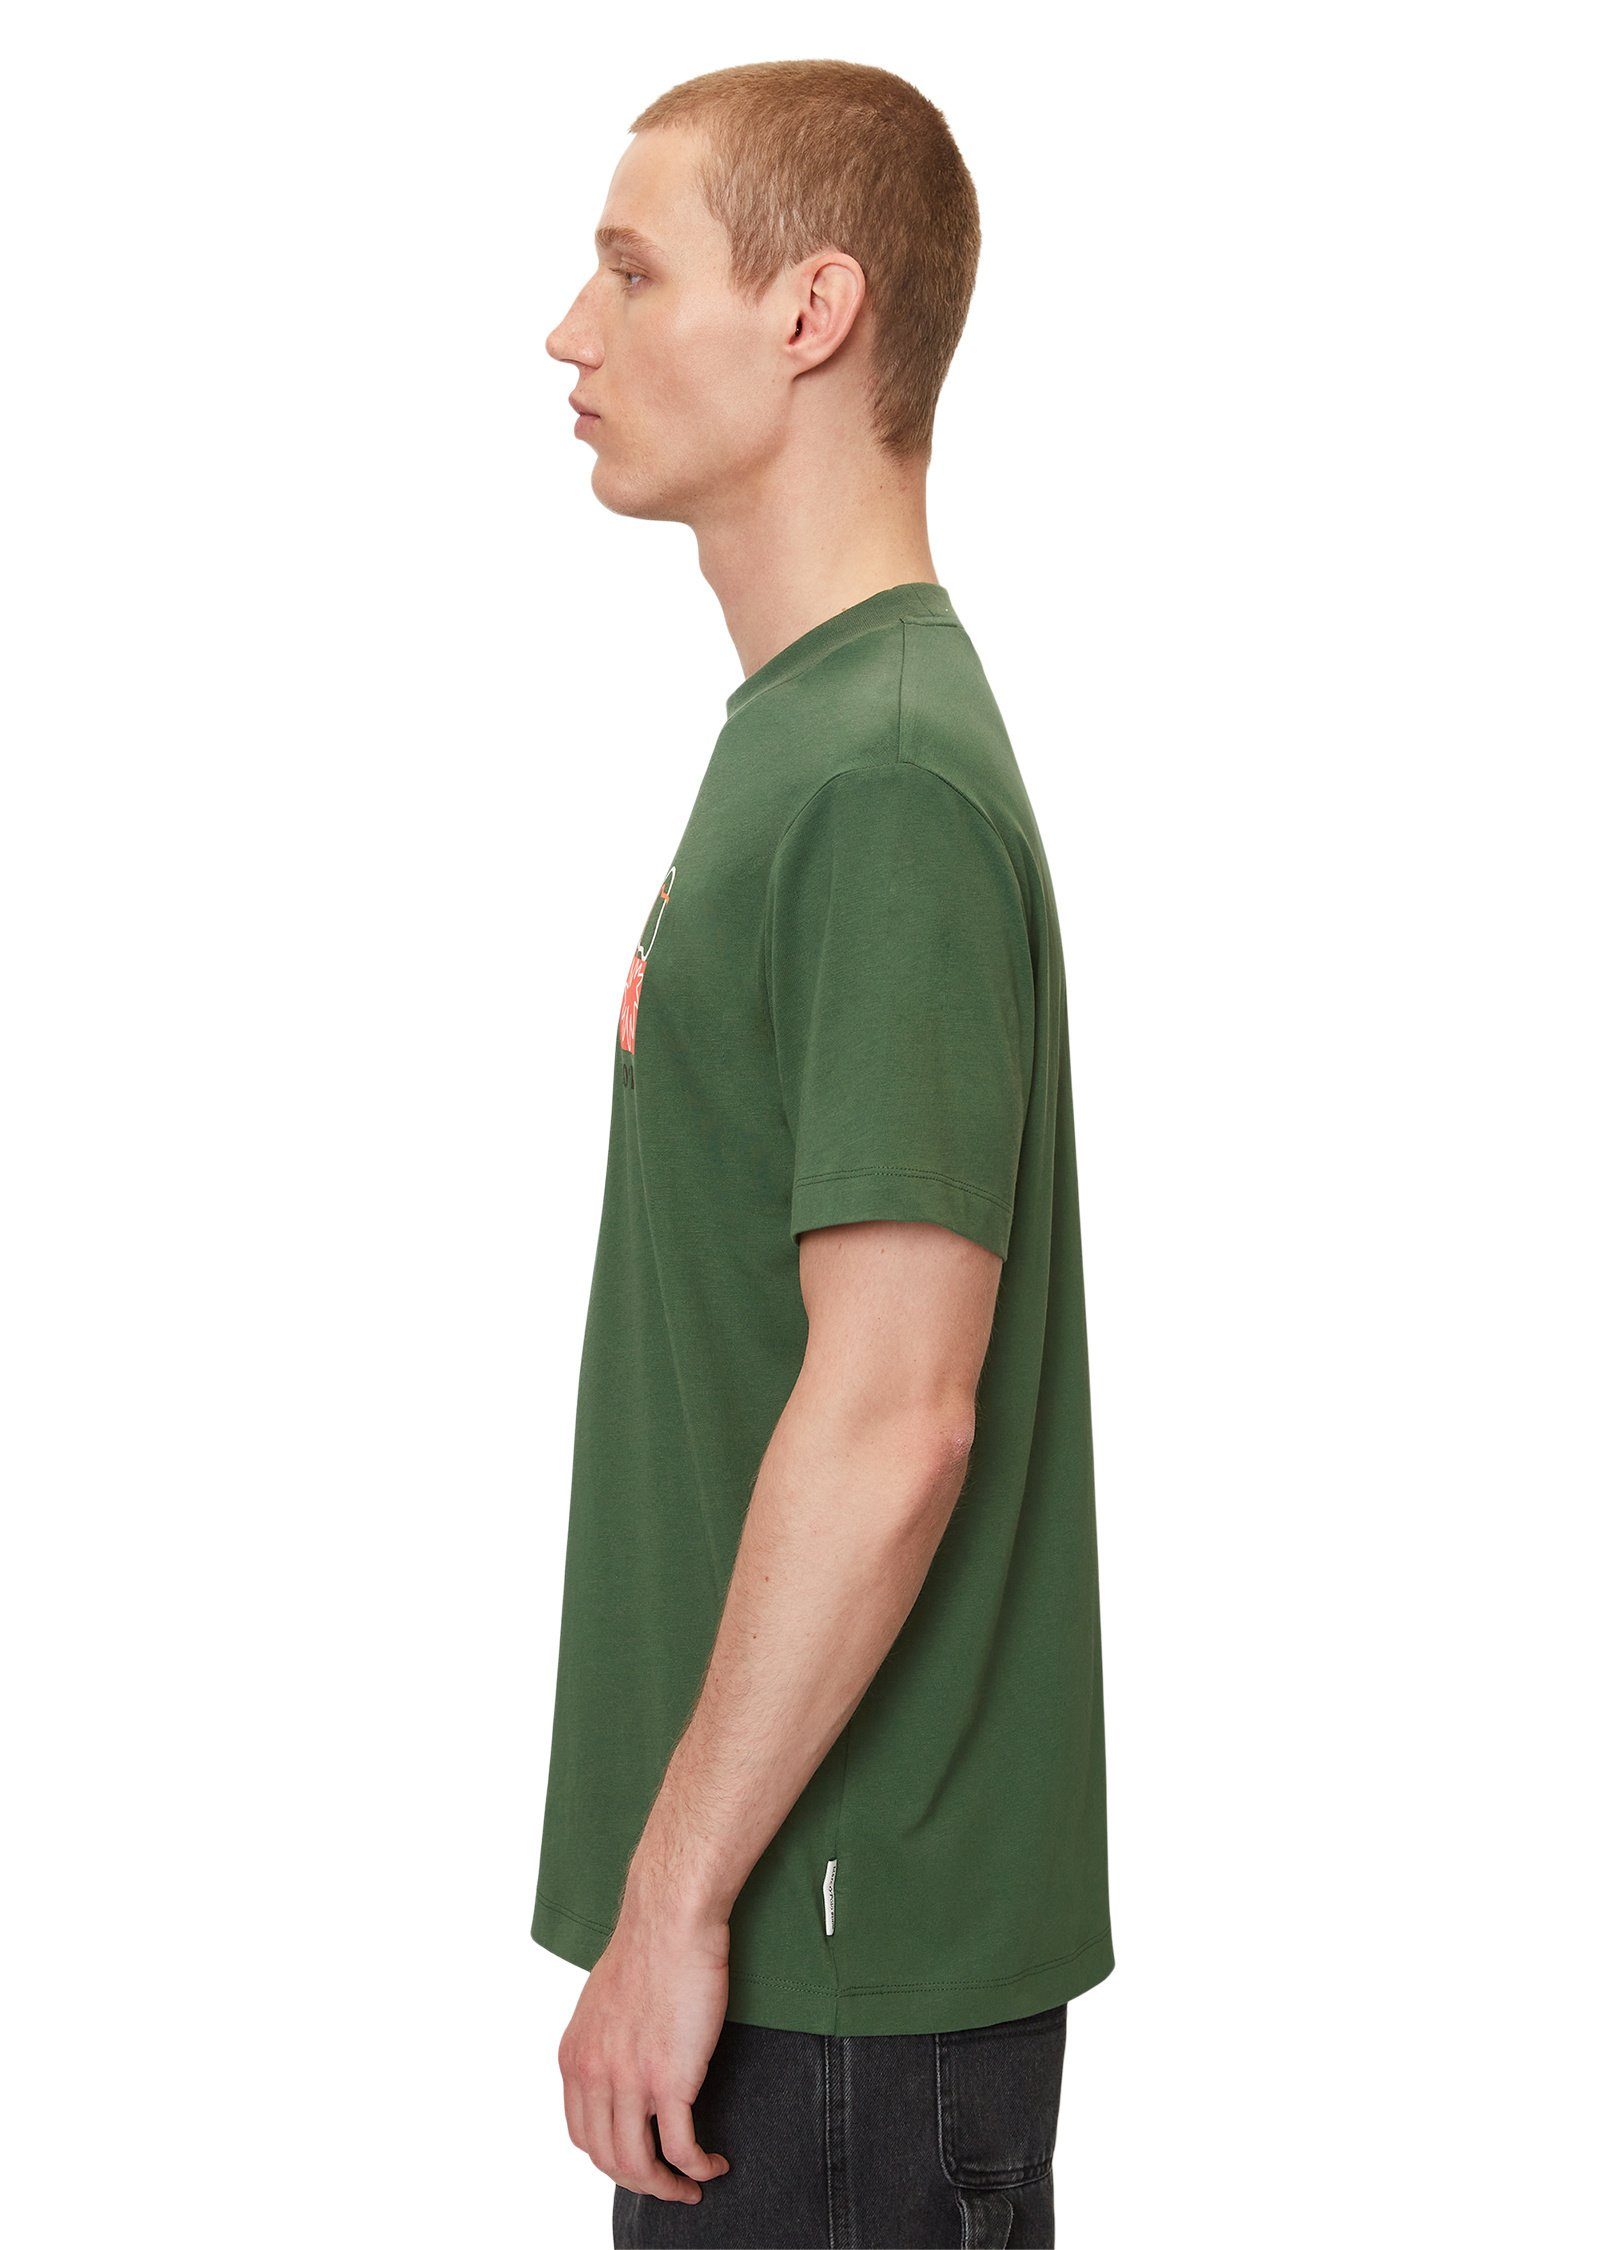 nach grün Marc O'Polo je Farbe Rückenprint T-Shirt markantem mit DENIM